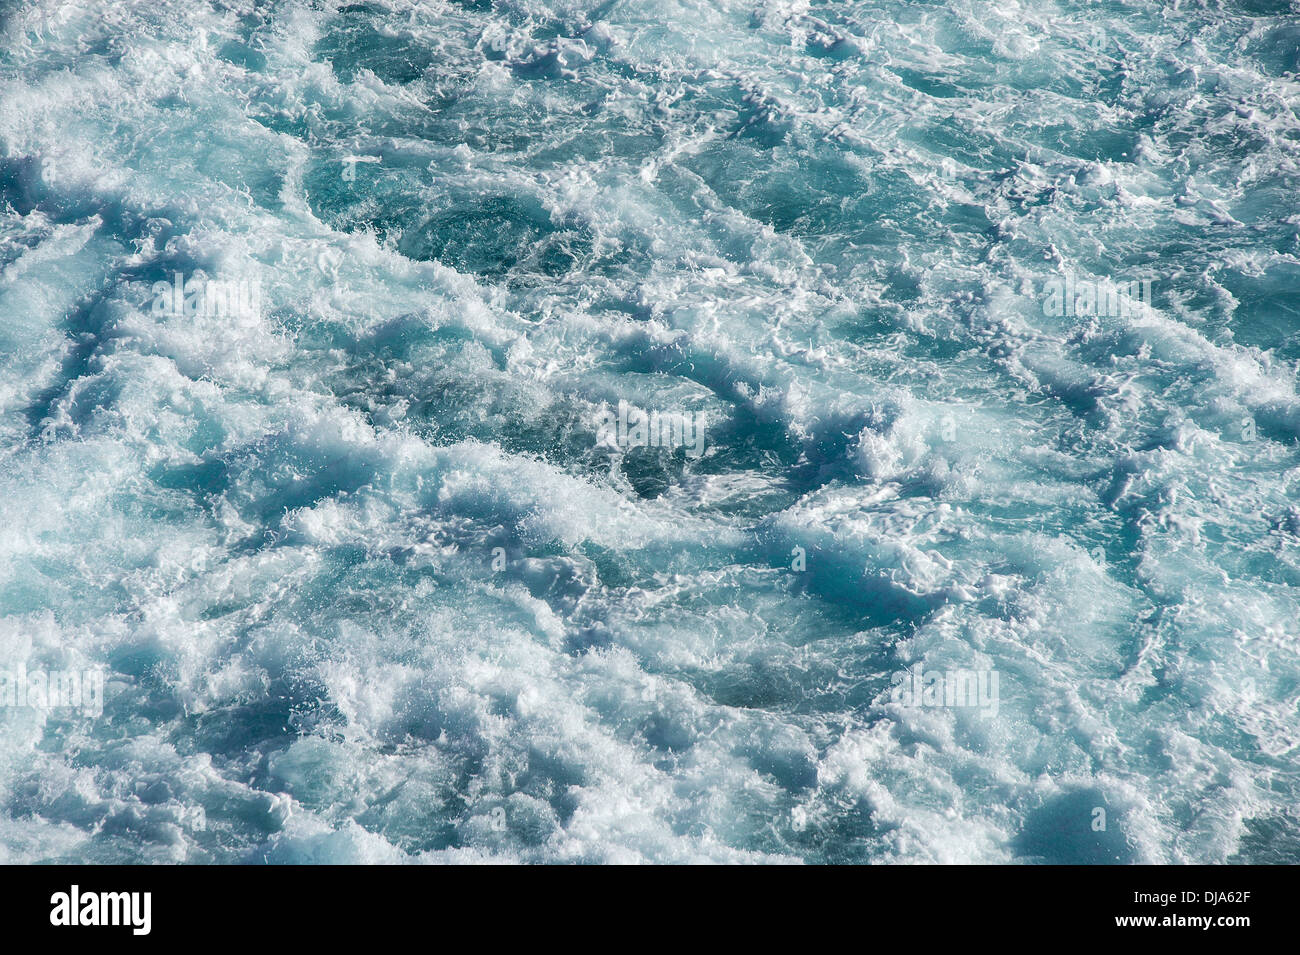 Churning ocean water. Stock Photo